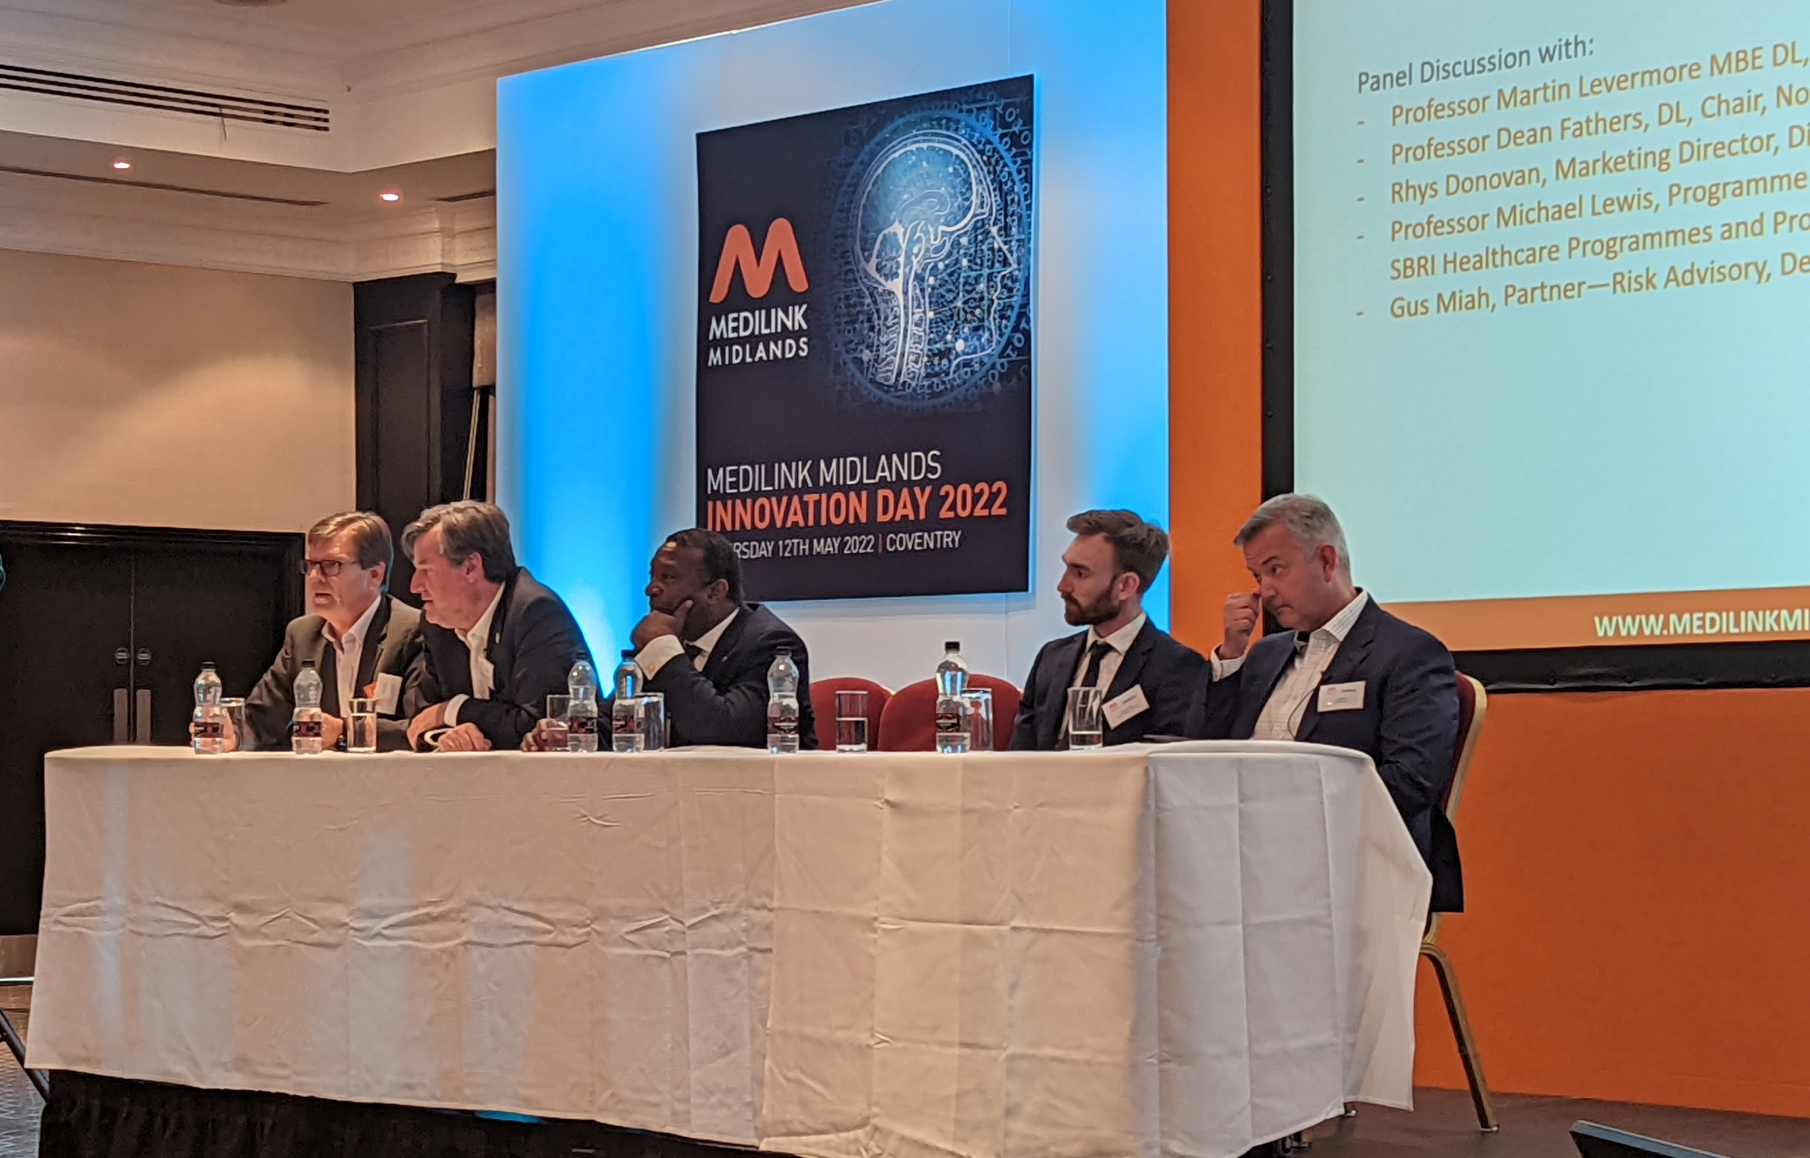 Medilink Midlands Innovation Day Panel Discussion